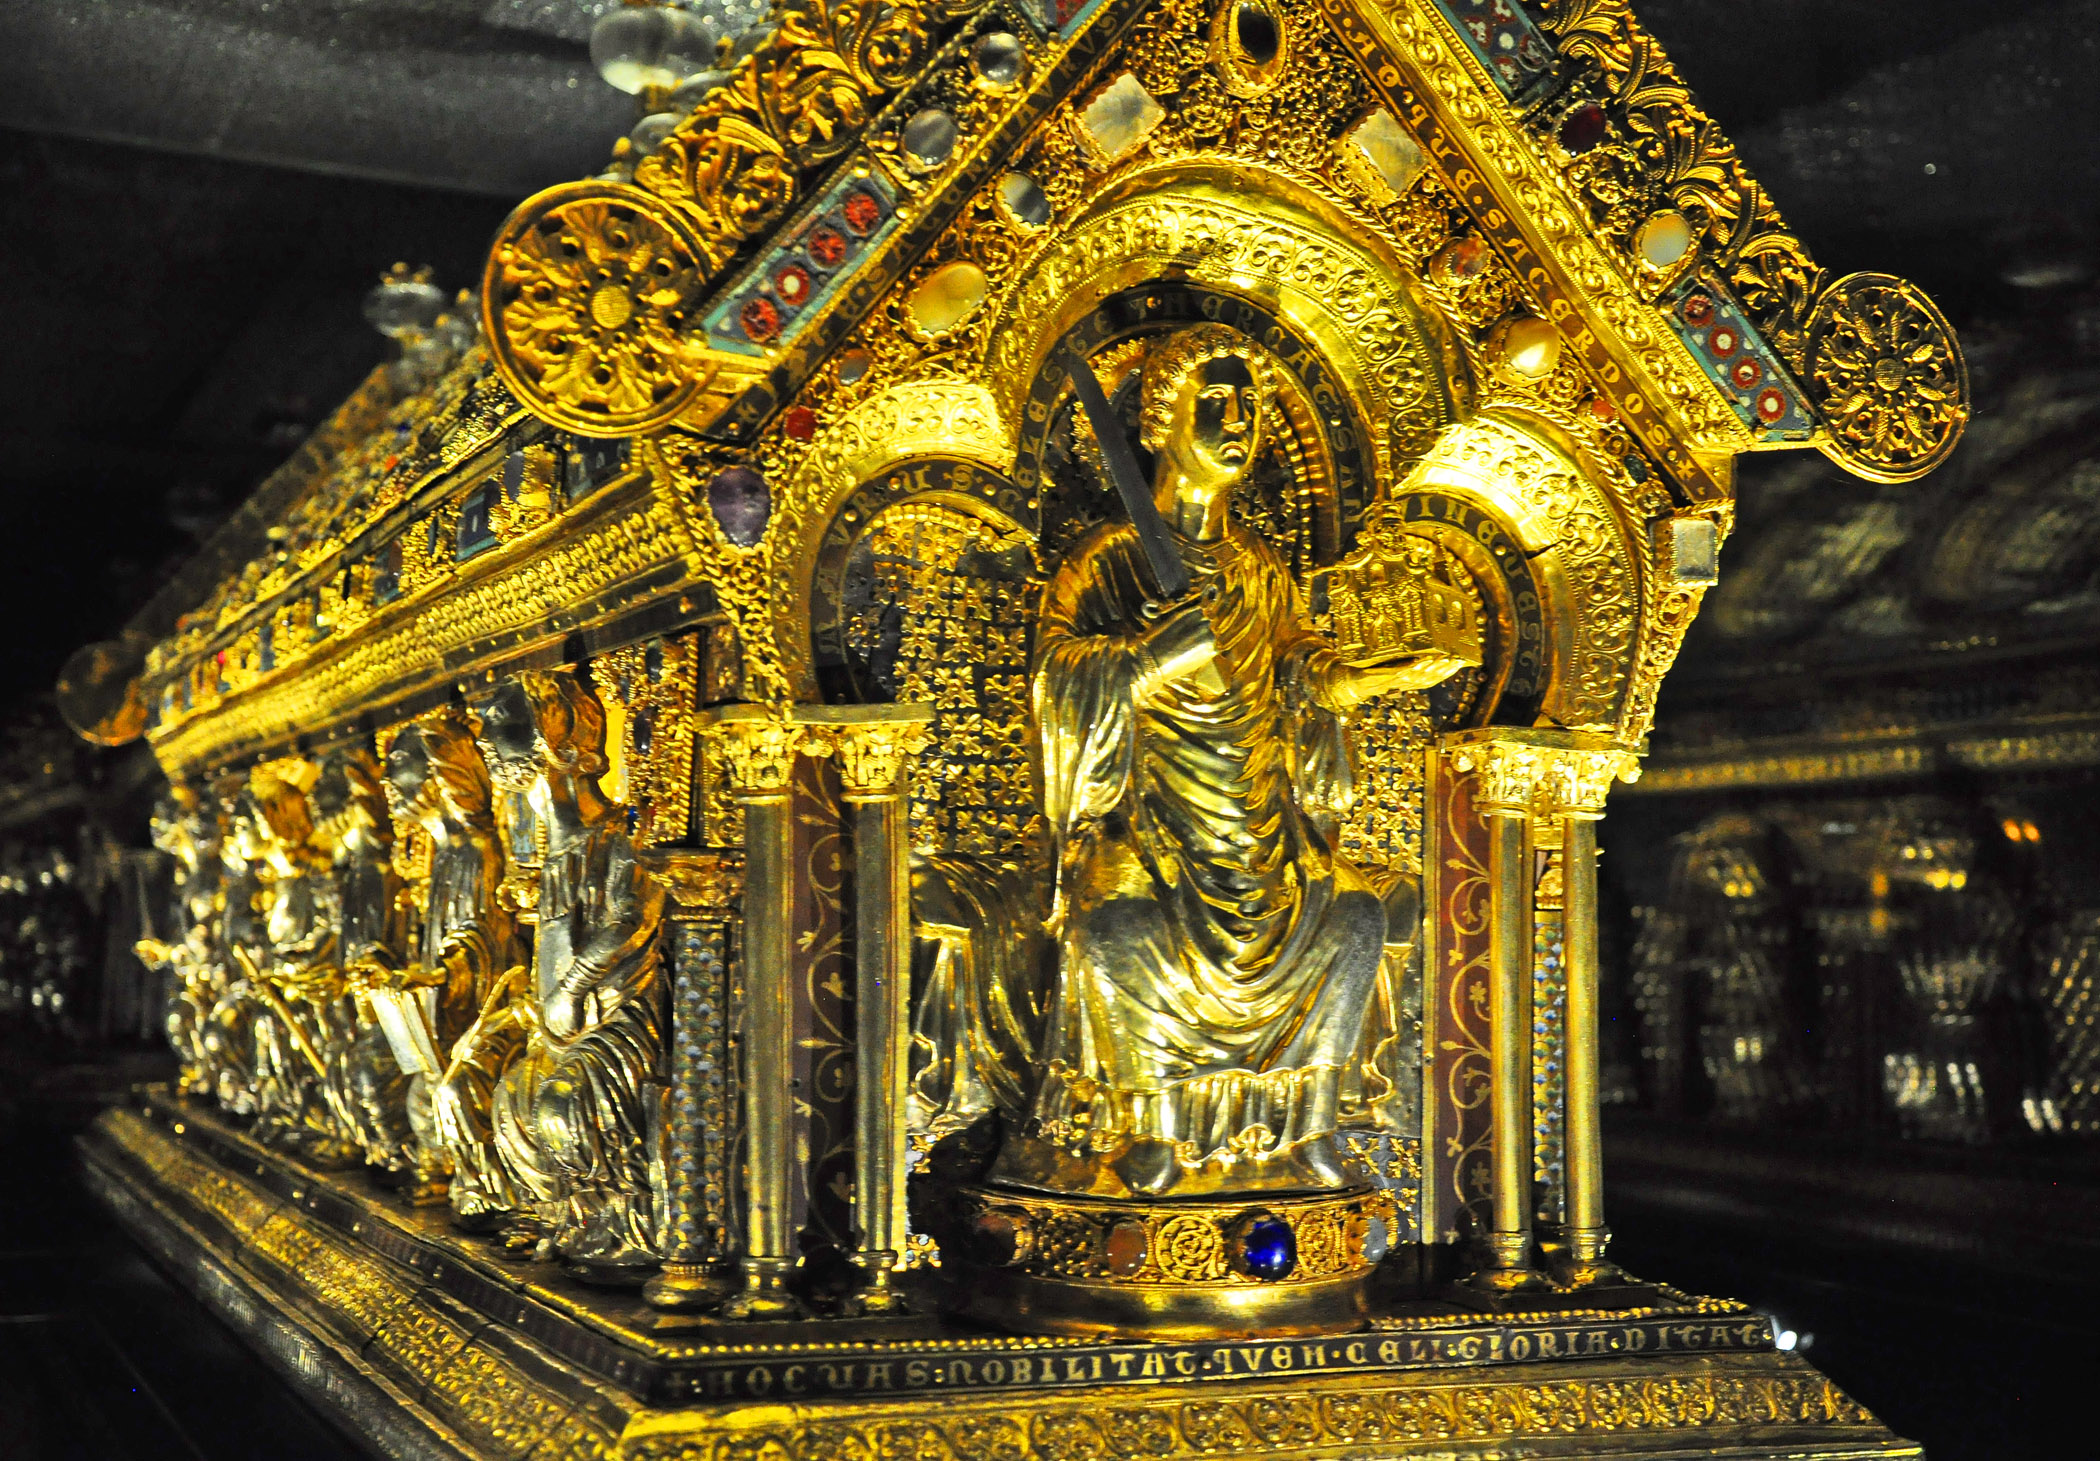 4. Reliquary of St Maurus